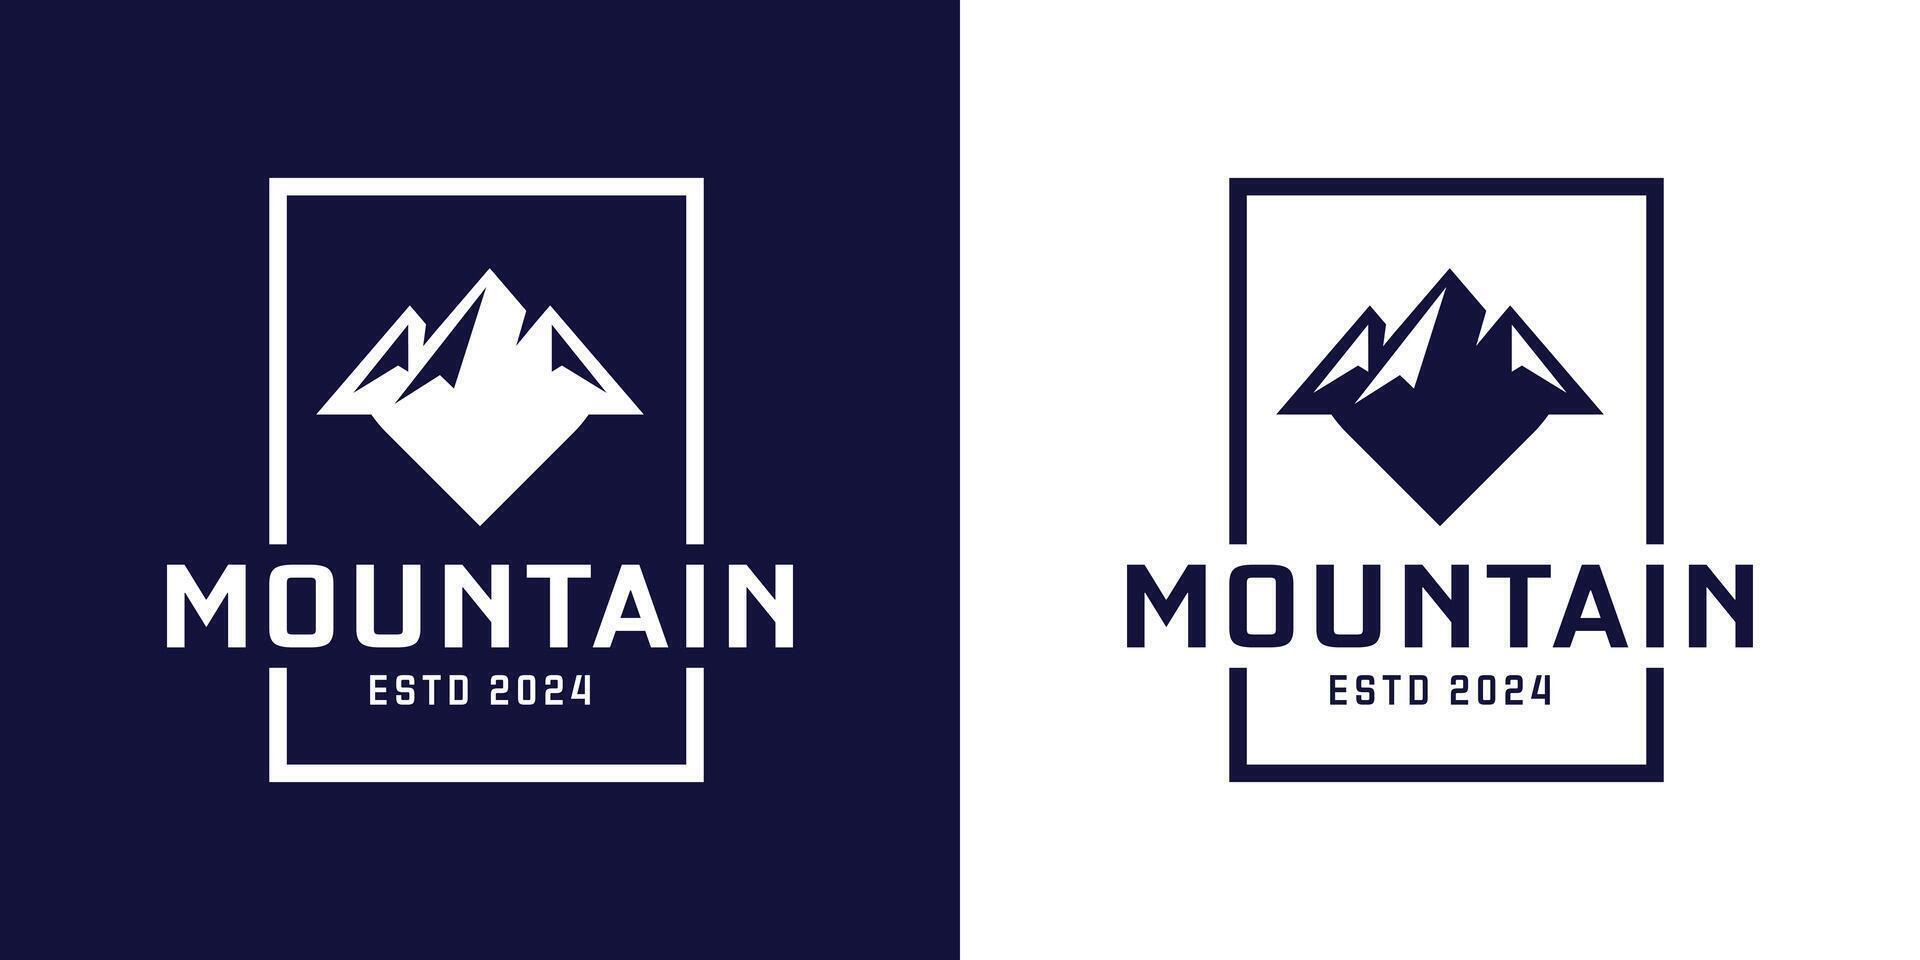 mountain peak logo design in poster style vector